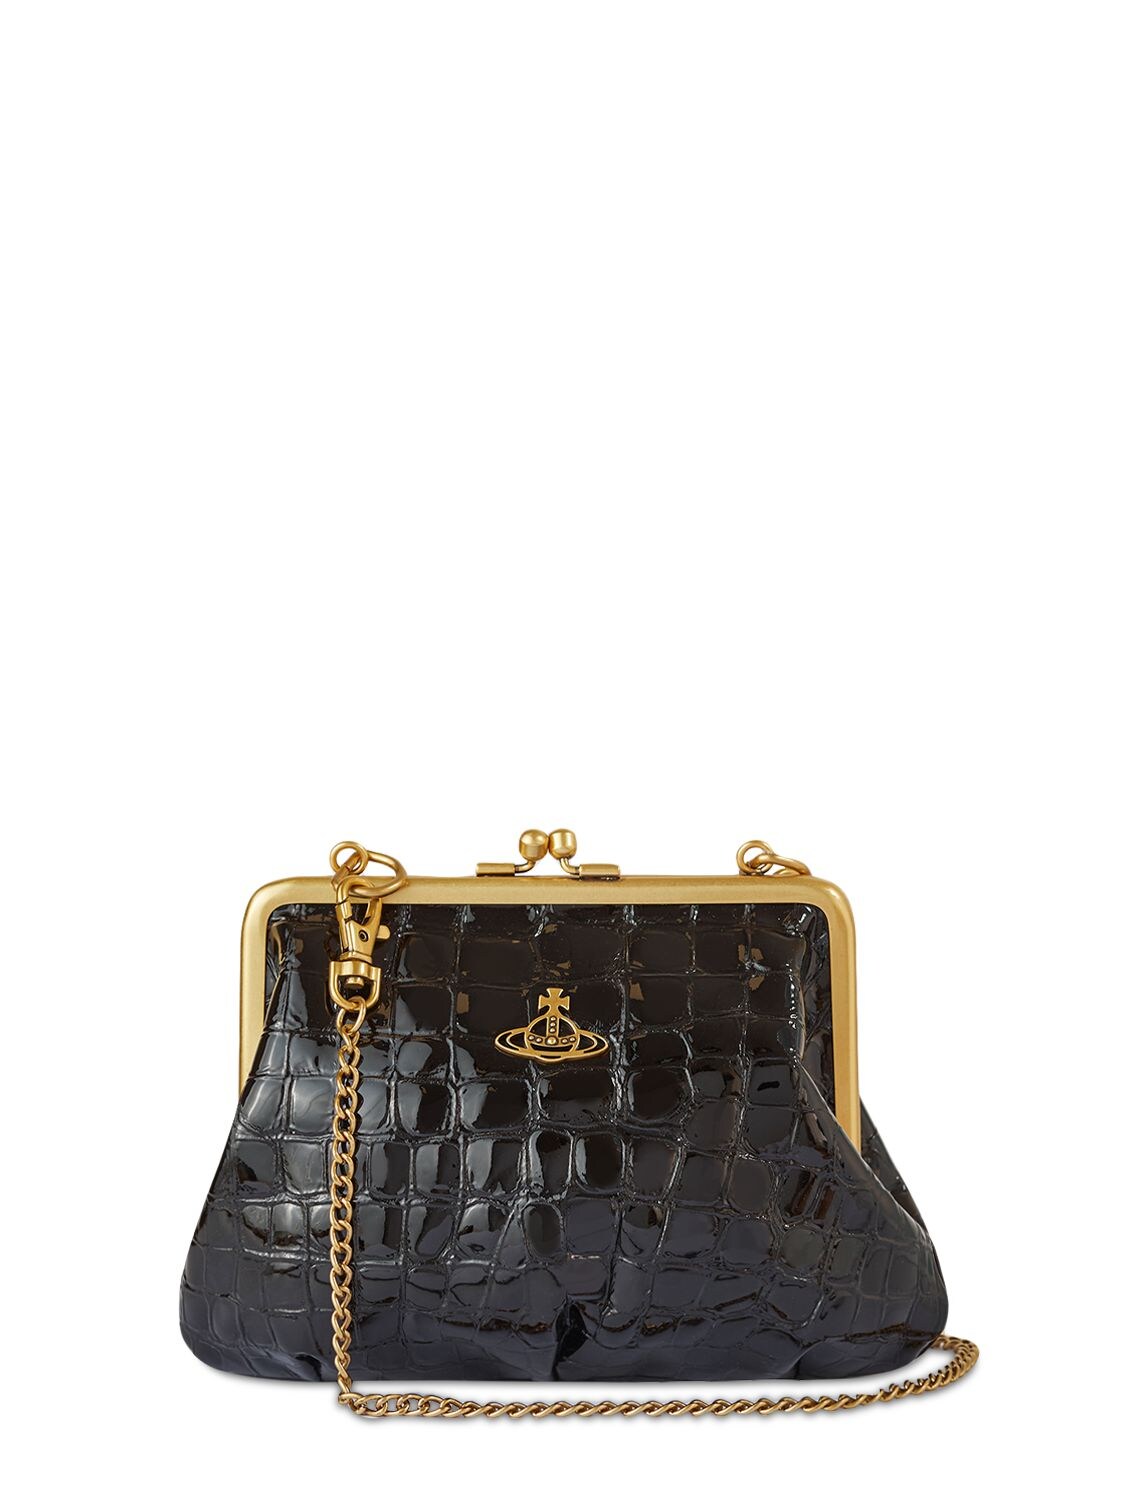 Vivienne Westwood - Archive orb croc embossed purse bag 